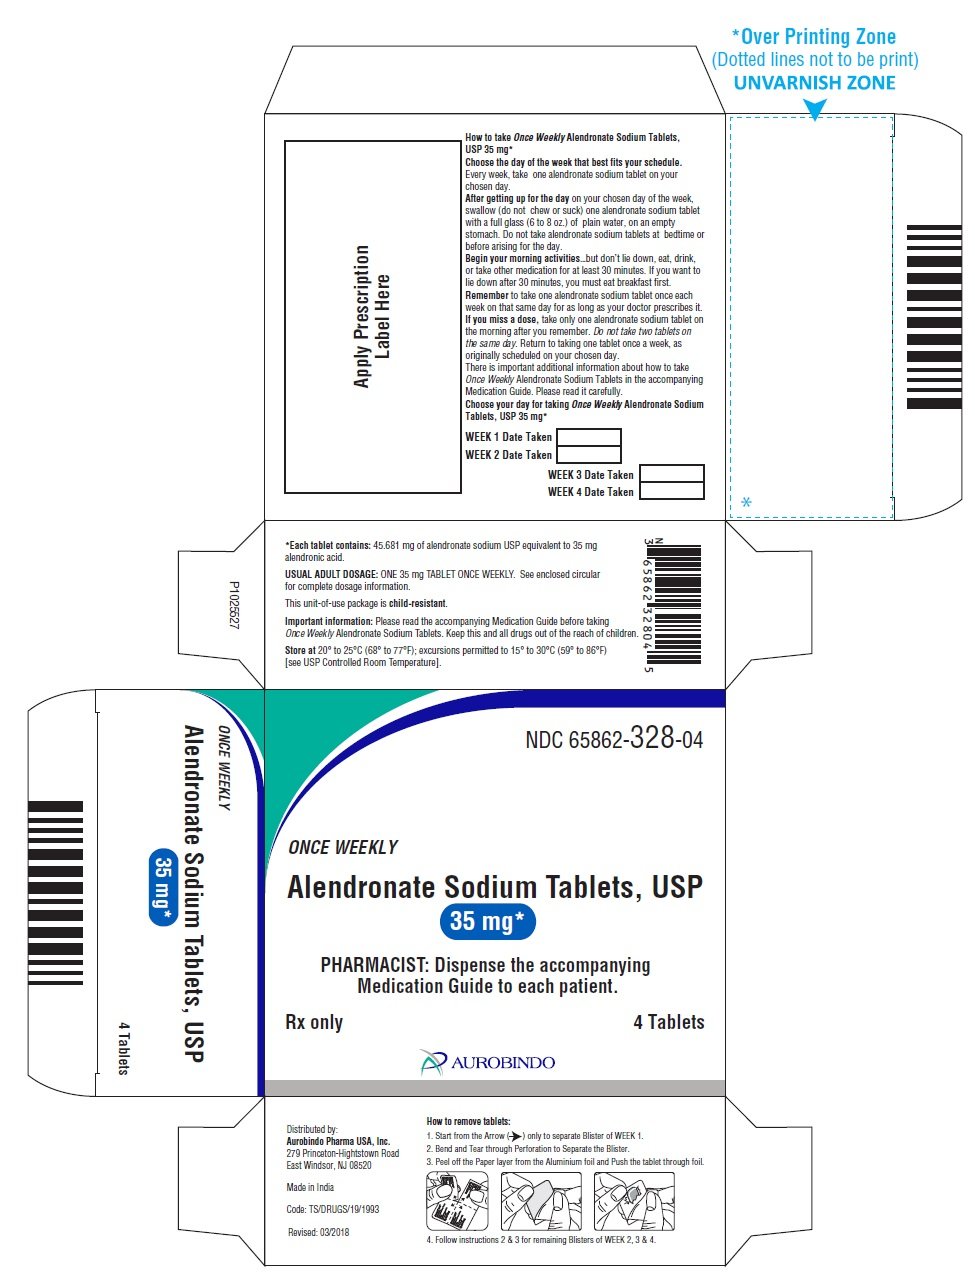 PACKAGE LABEL-PRINCIPAL DISPLAY PANEL - 35 mg Blister Carton (4 Unit-of-use)